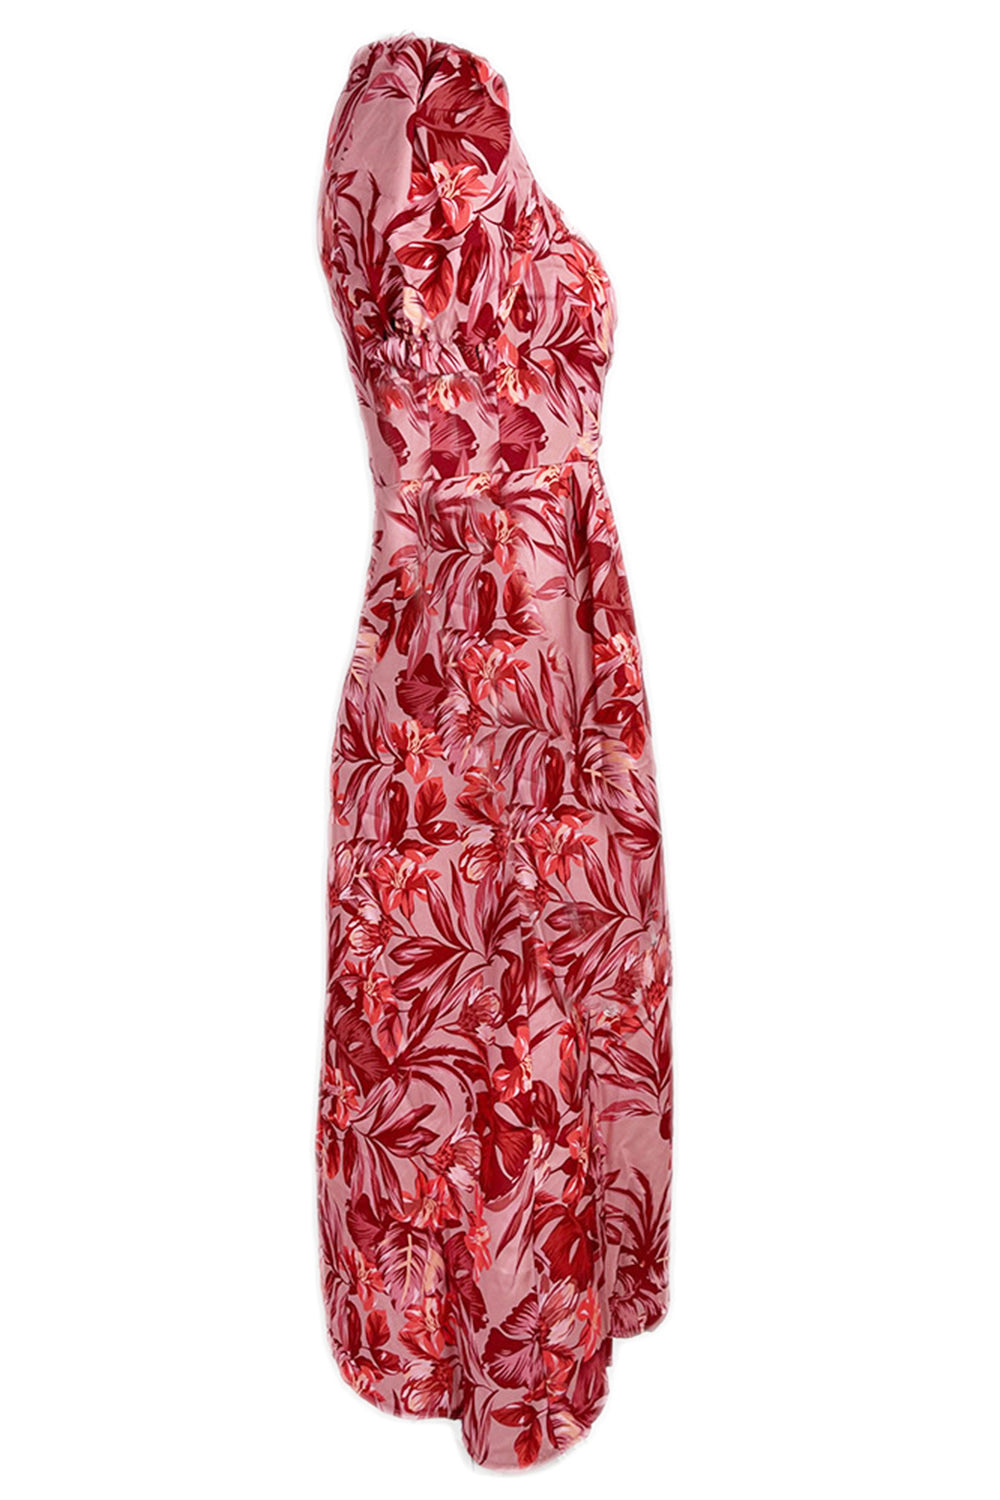 Printed Burgundy Summer Dress with Sleeves